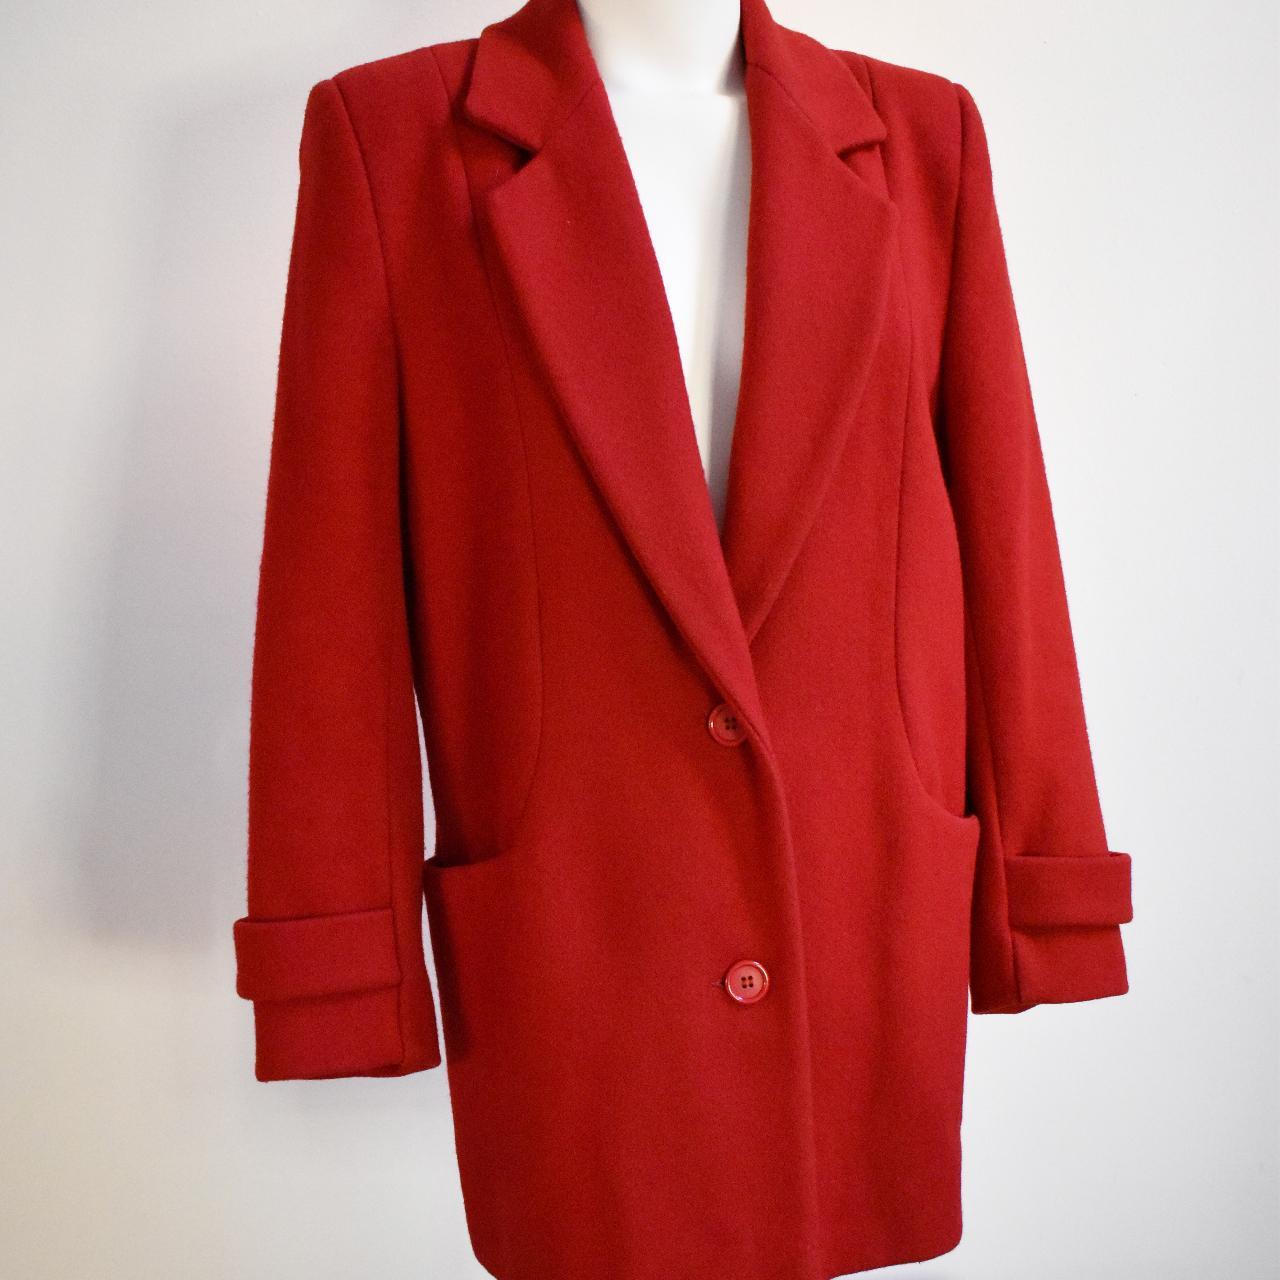 Red wool Ferncroft coat size 6, stylish elegant... - Depop